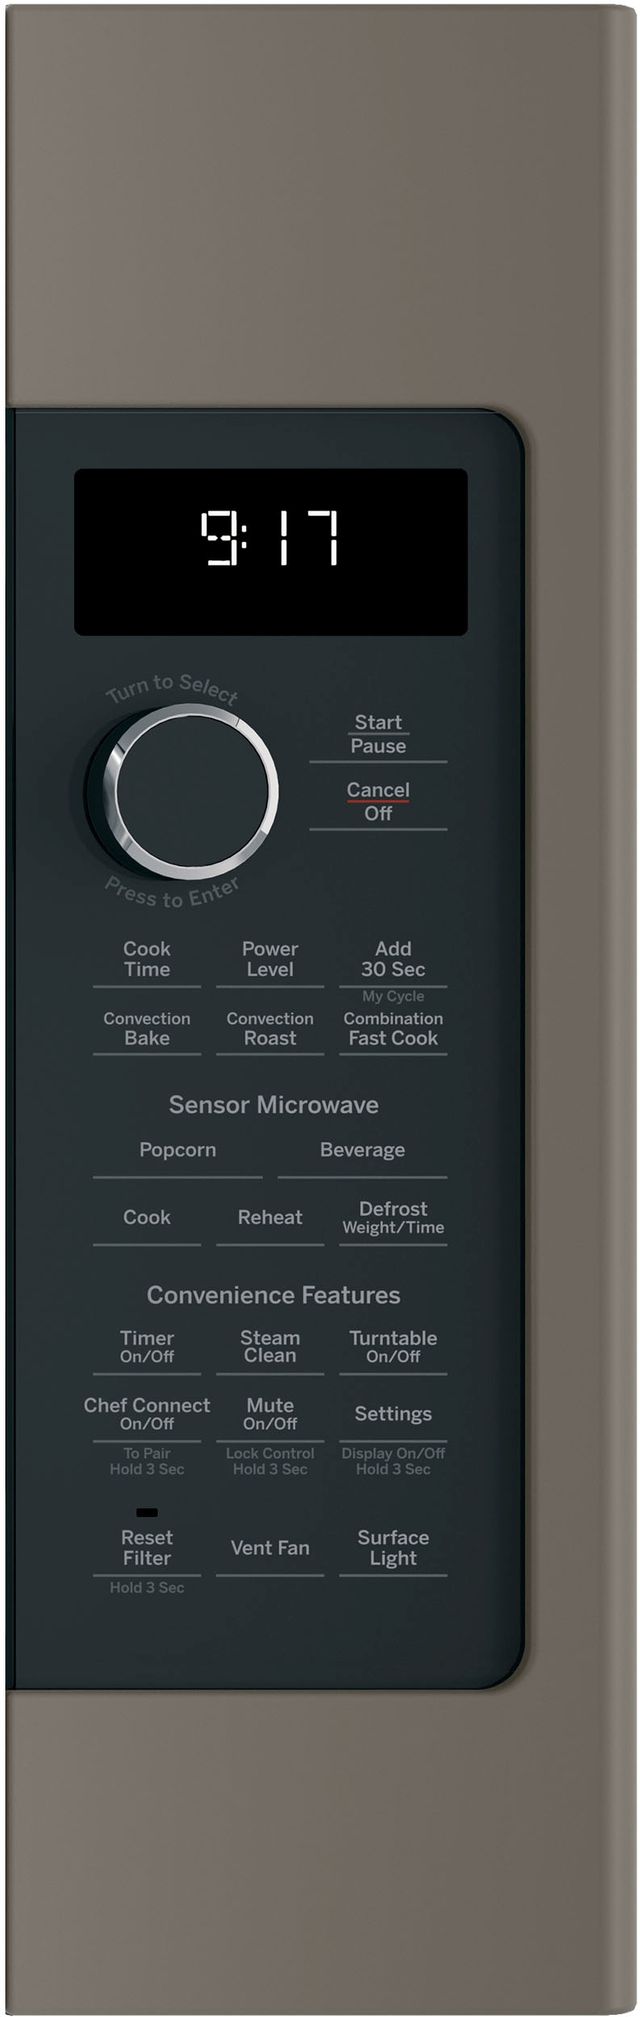 GE Profile™ 1.7 Cu. Ft. Slate Over The Range Microwave 4